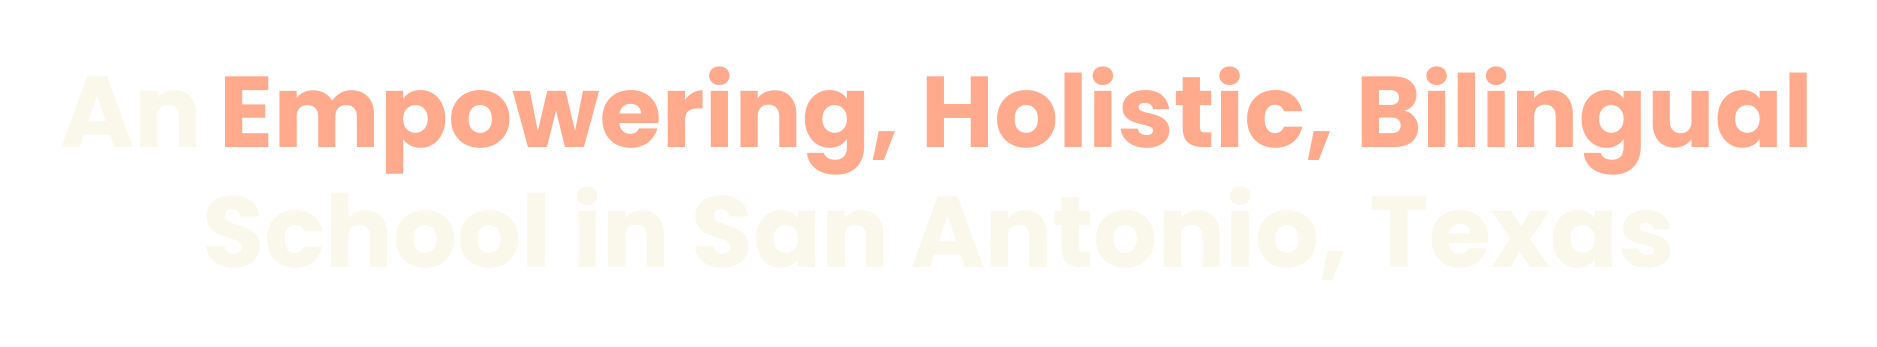 An Empowering, Holistic, Bilingual School in San Antonio, Texas